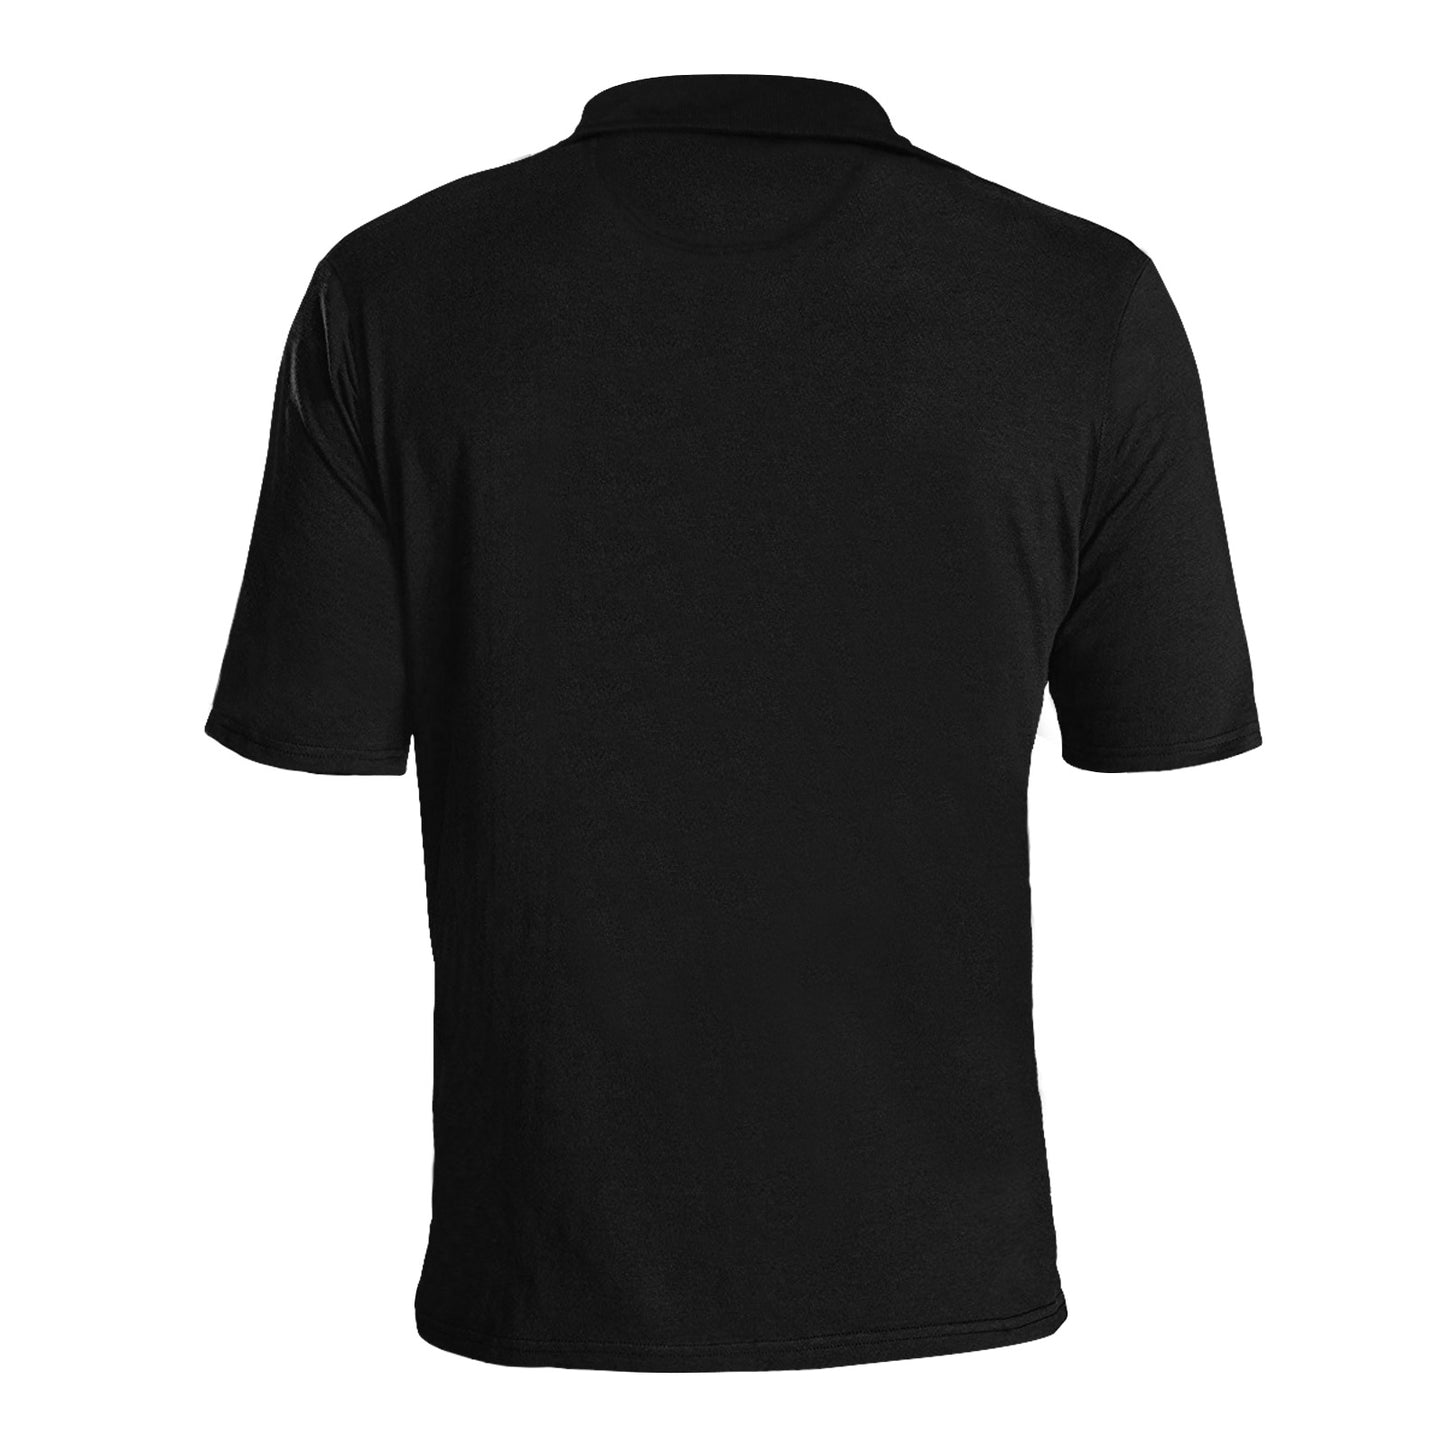 Jet Black Collection Men's All Over Print Polo Shirt (T55) - ELITA IMPERIA INC.